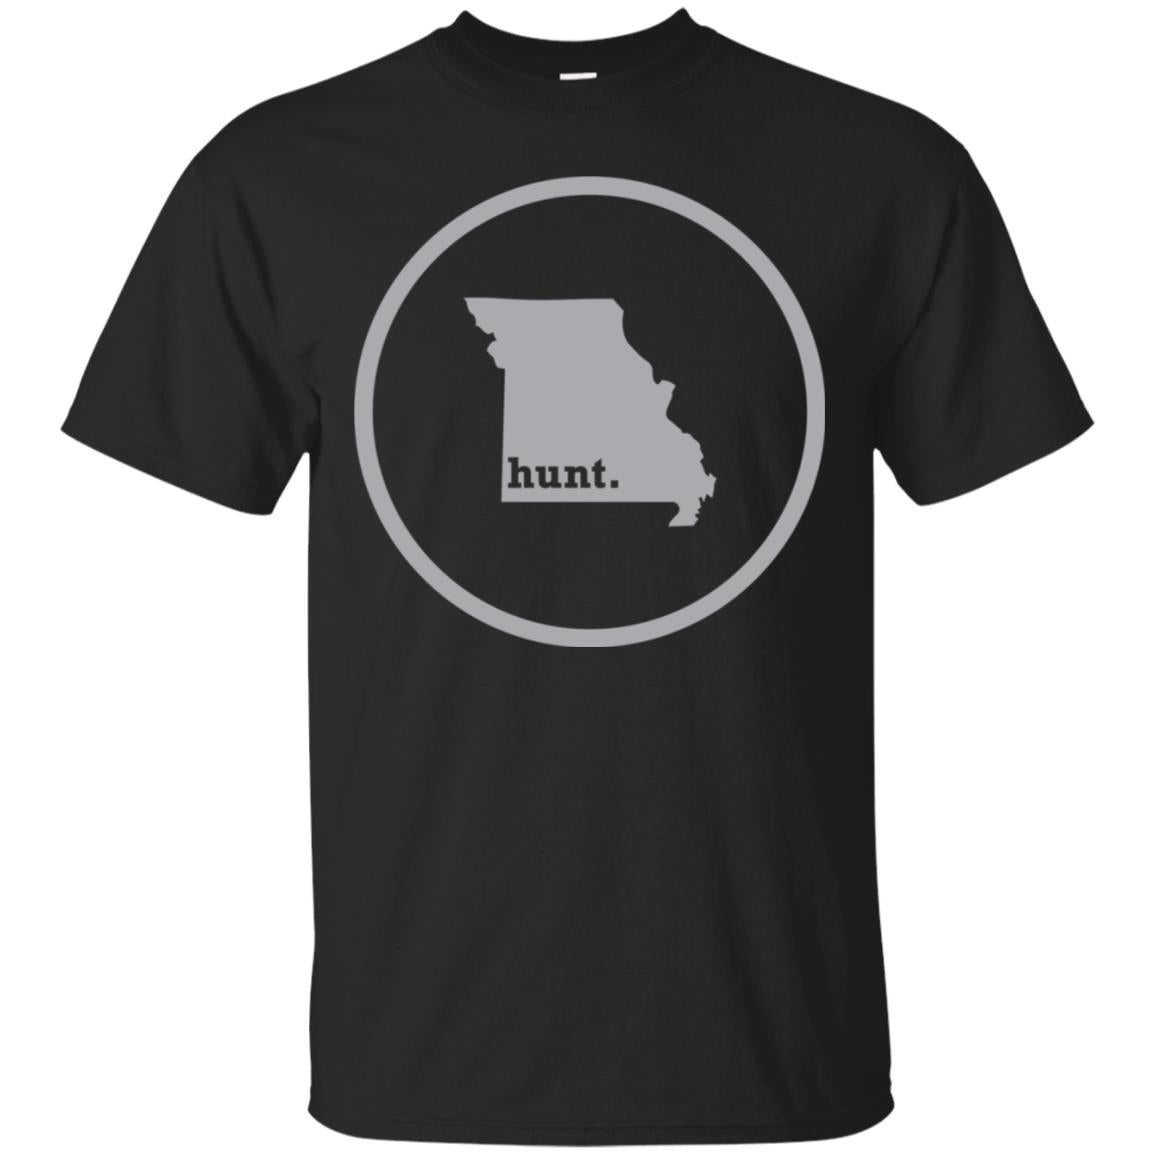 State Of Missouri Hunter Hunting Bowhunting T Shirt